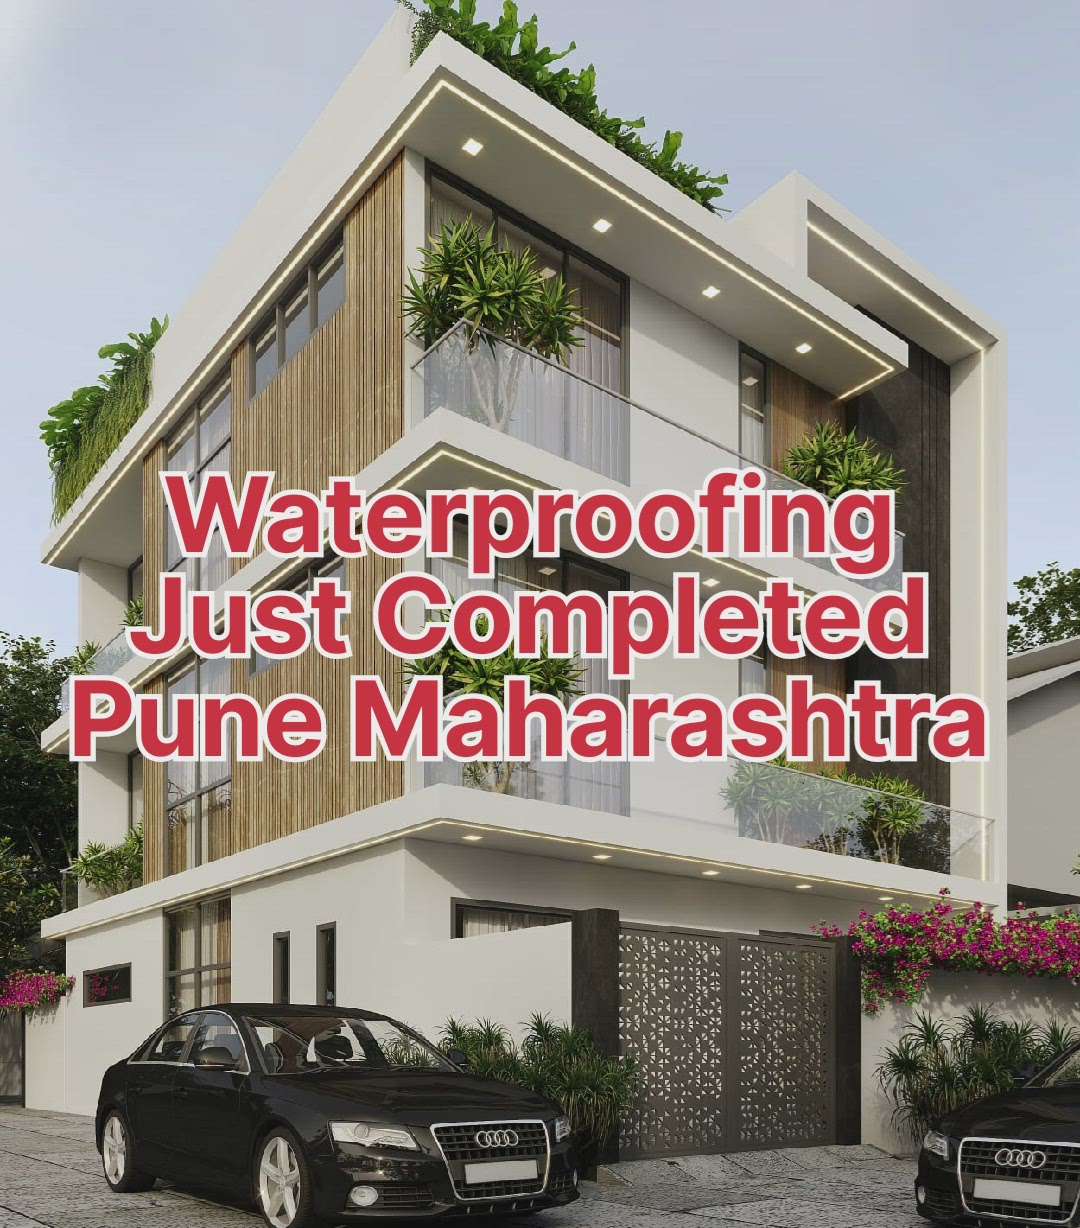 #waterproofing #waterproofingwithcementnearfinishing 
#consterction 
#delhi 
#waterproofingtreatment 
#roofwaterproofing 
#basementwaterproofing